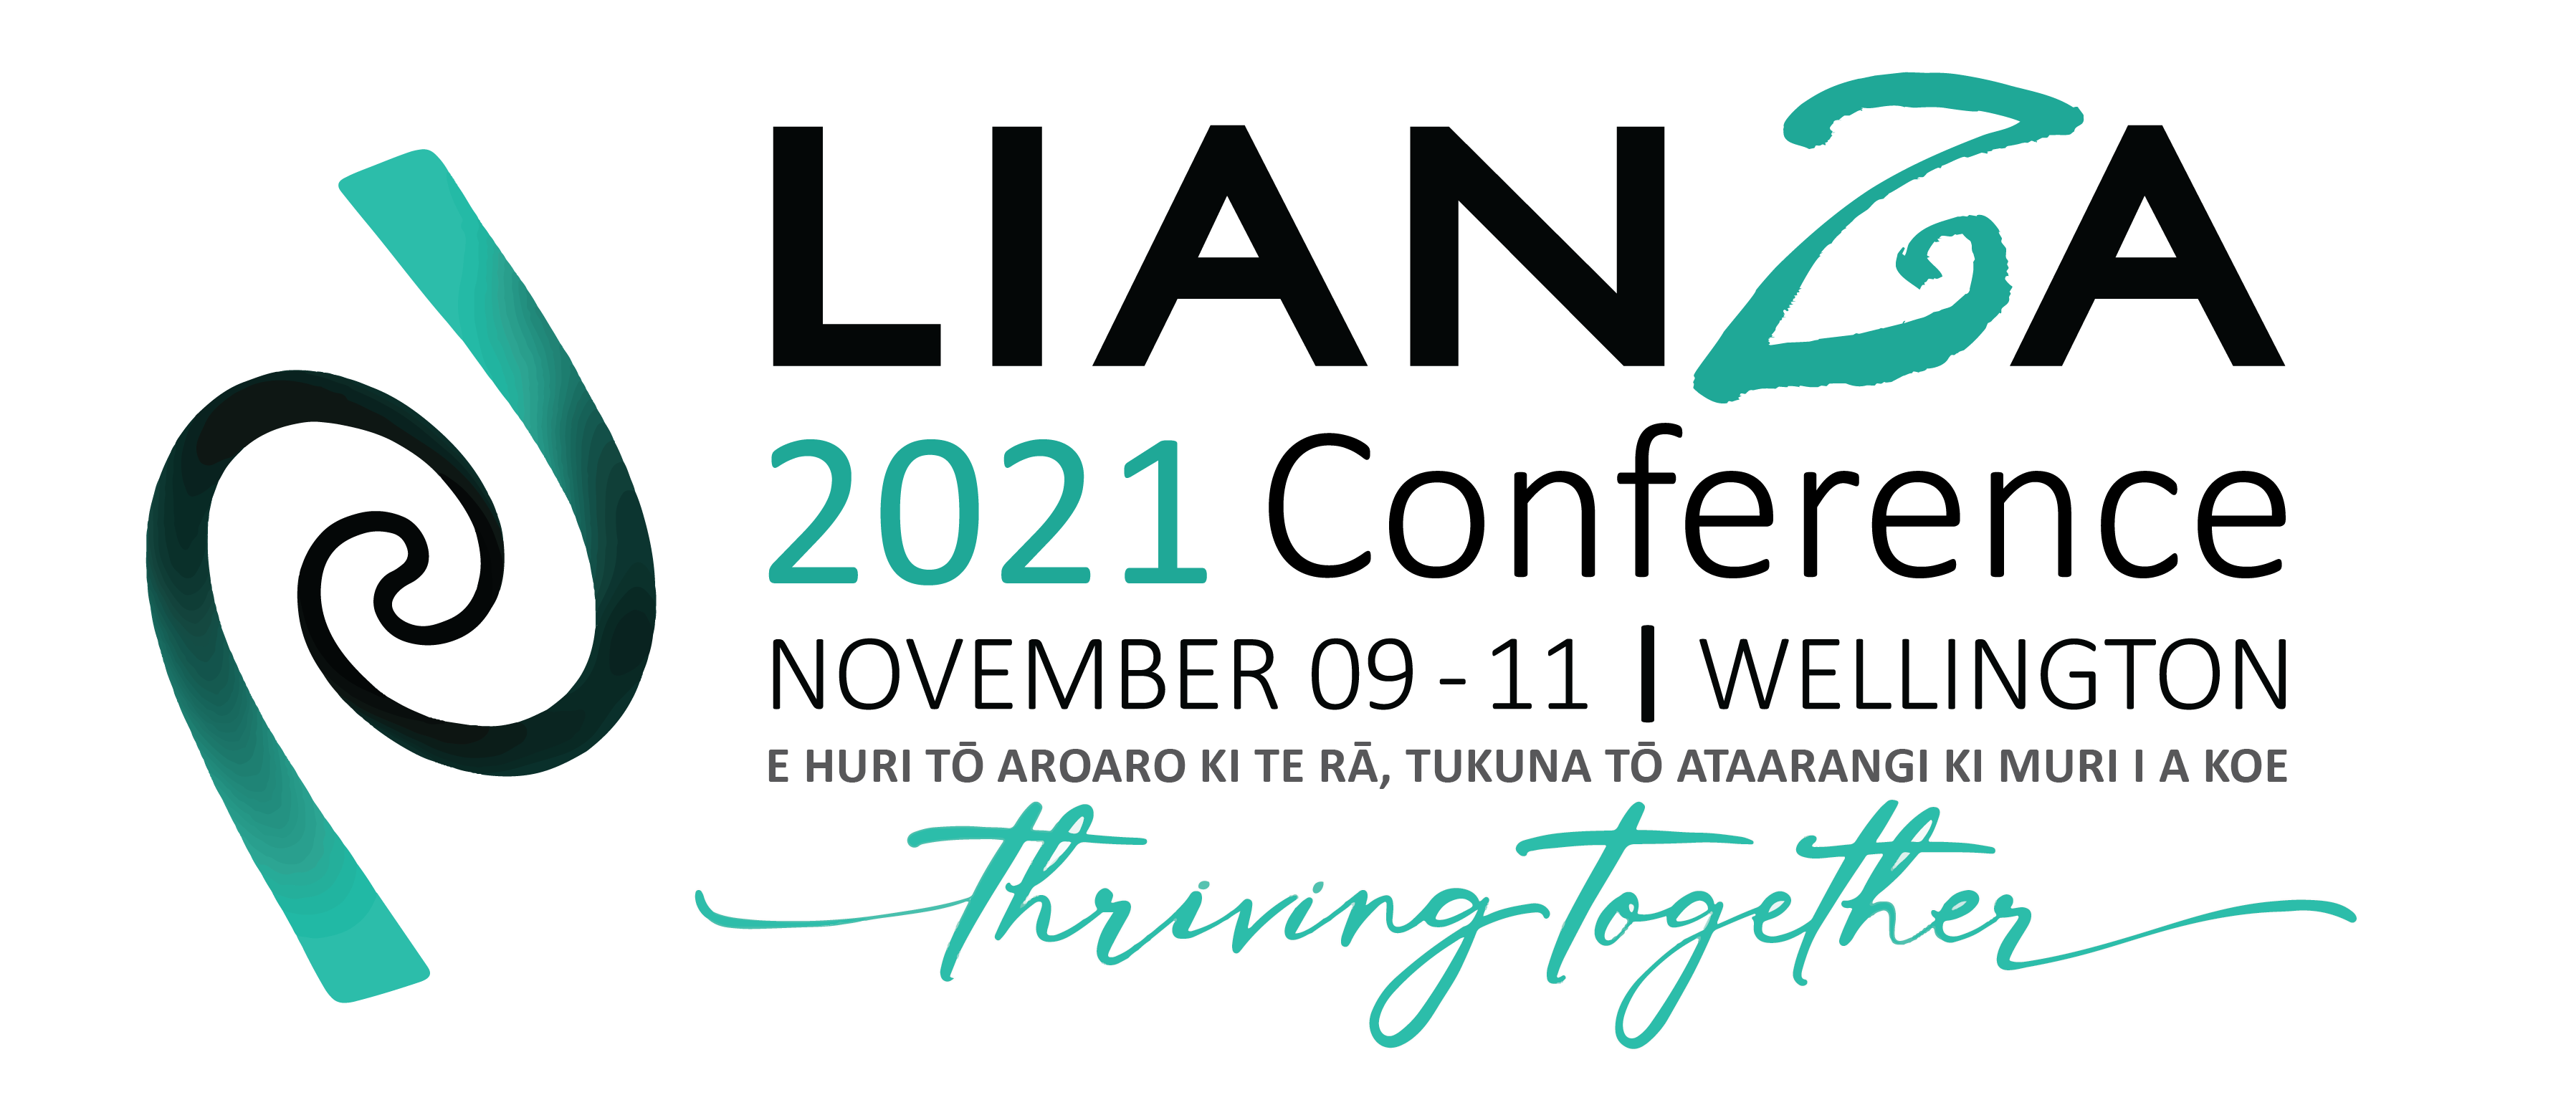 LIANZA 2021 Conference Logo - FINAL